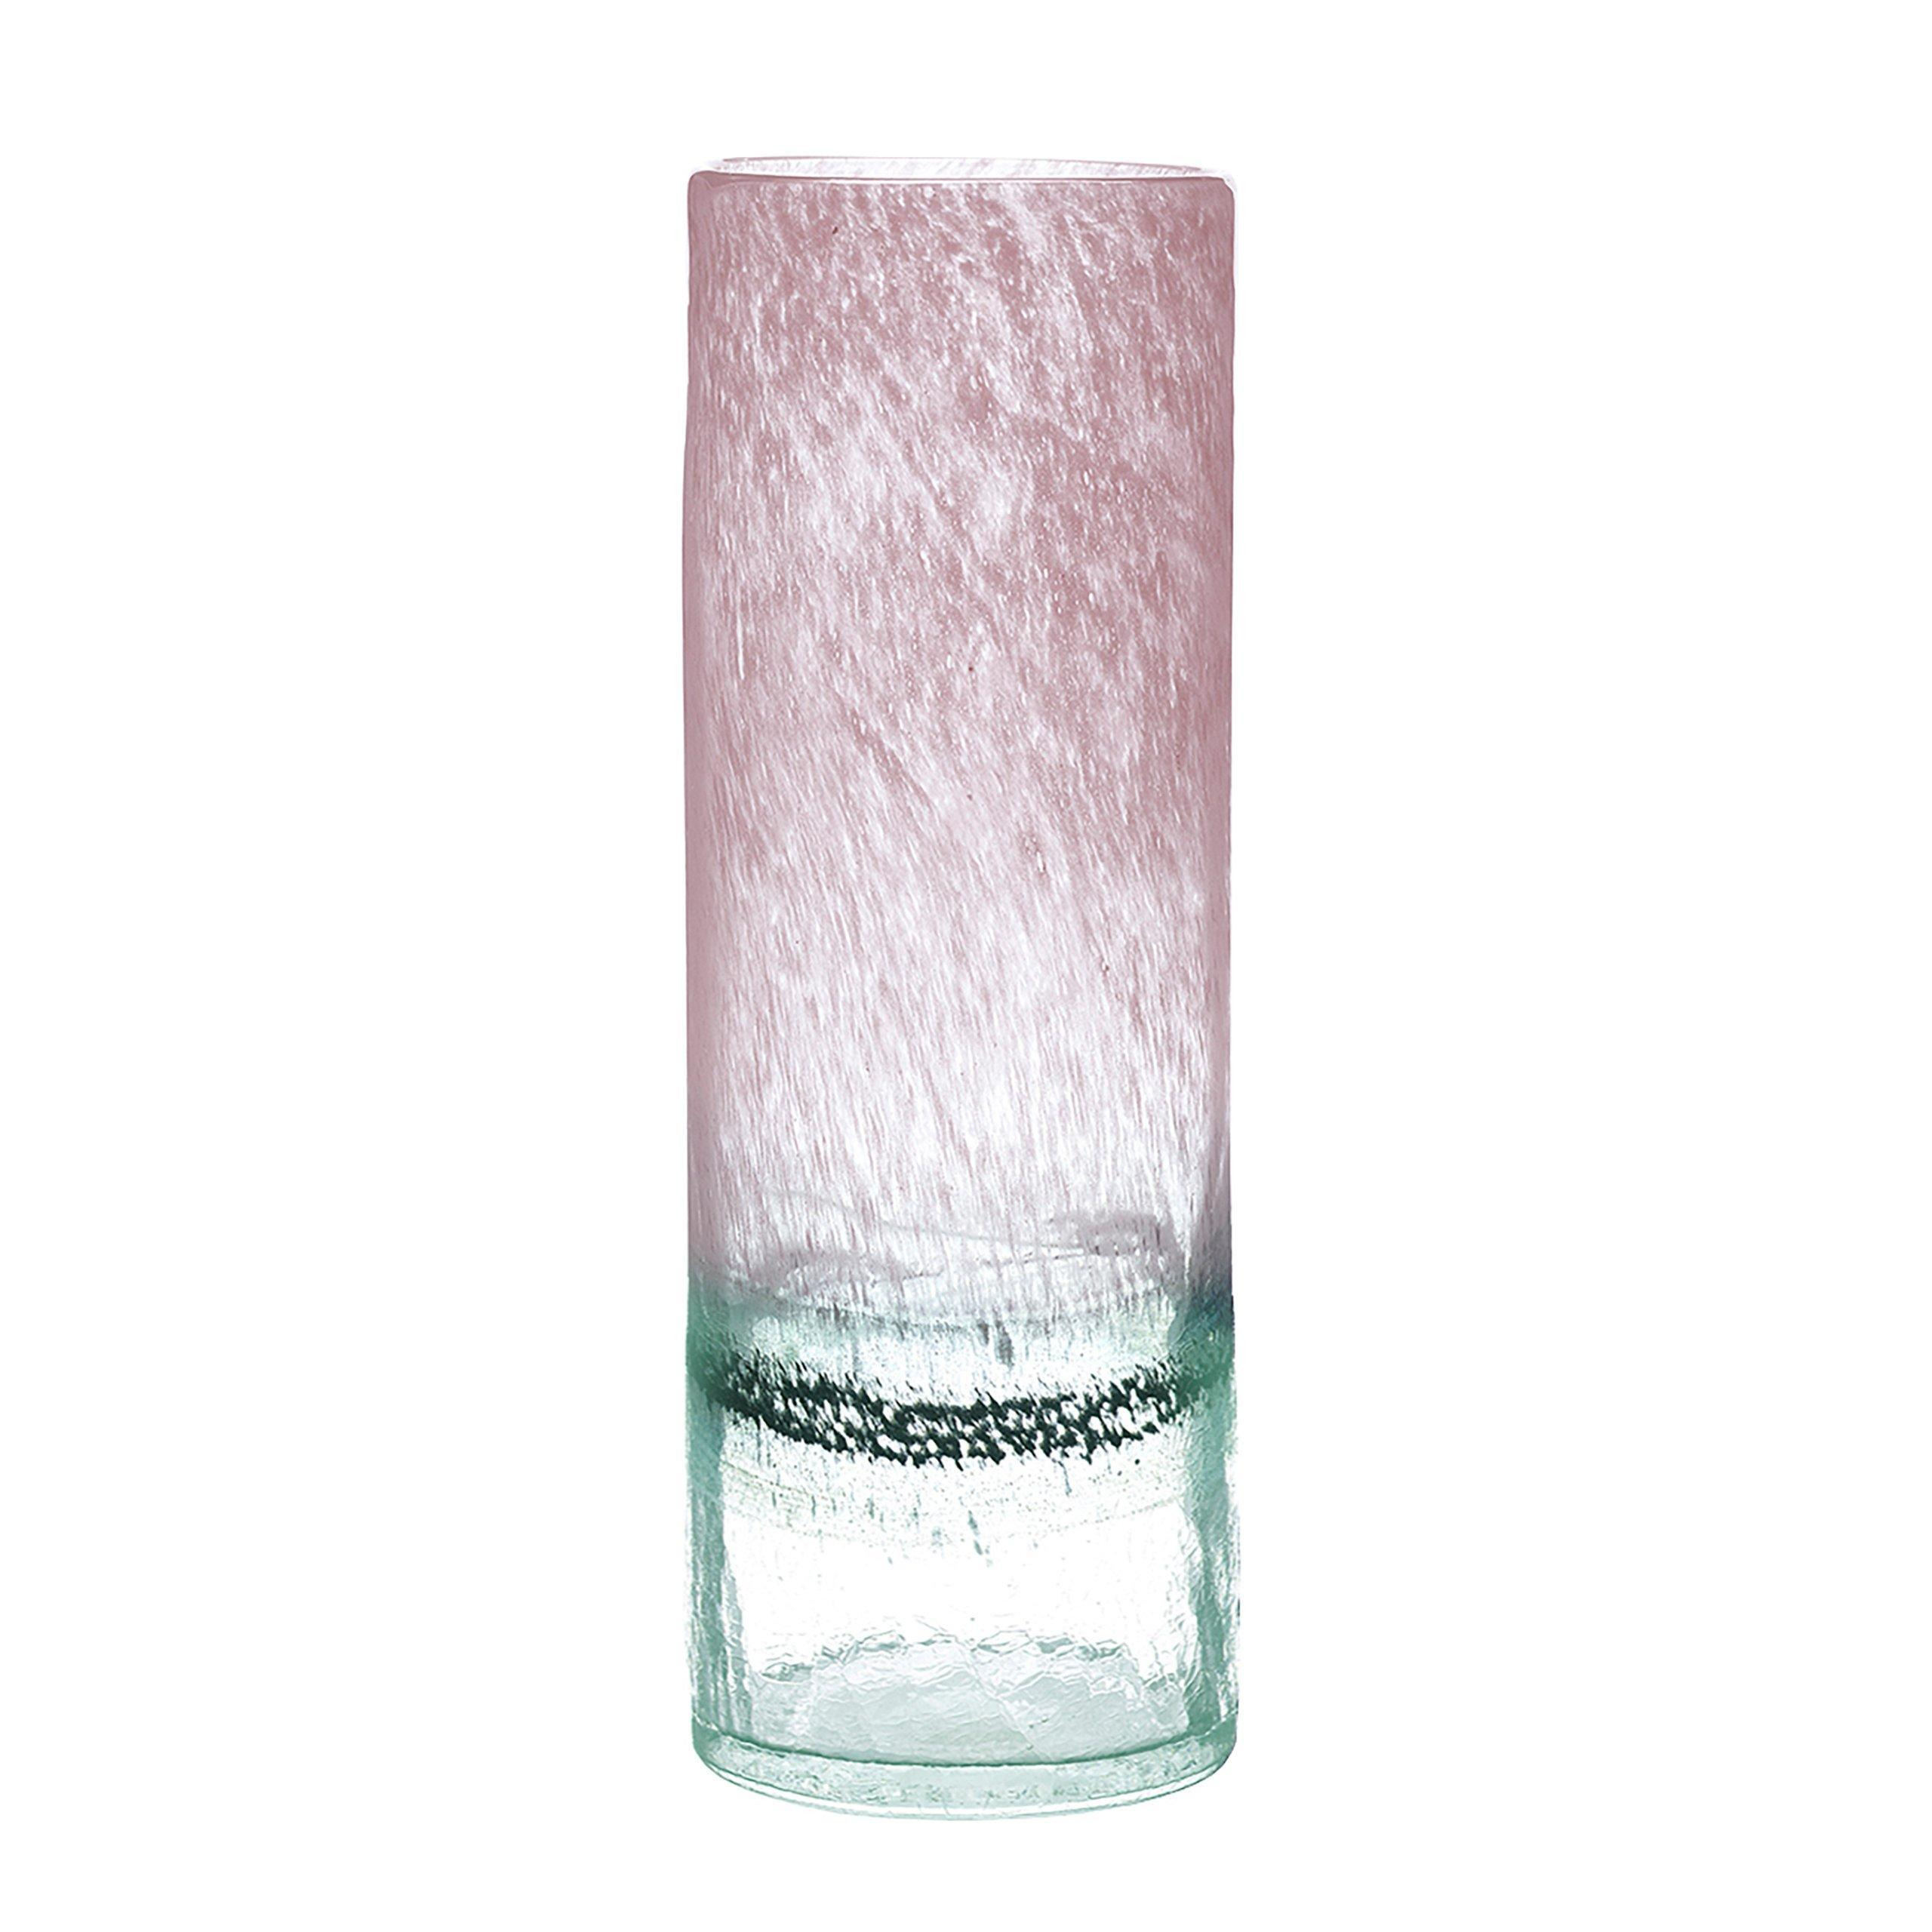 Dusk Hand-Blown Large Glass Vase - image 1